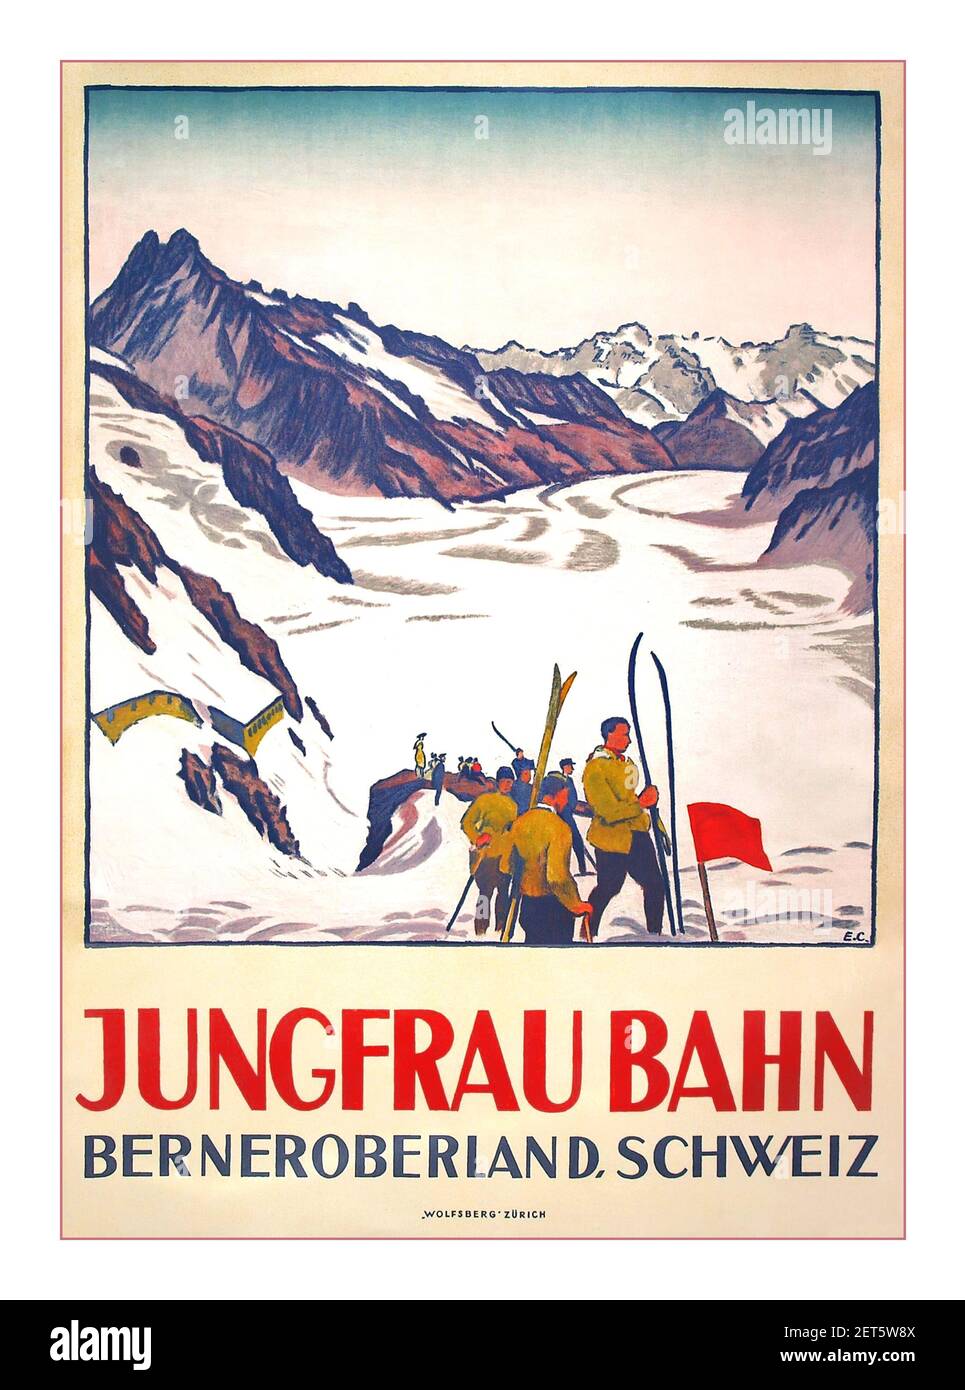 Vintage 1900's ski Travel Poster by Emil Cardinaux (1877-1936) Jungfrau Bahn, Berner Oberland Schweiz, affiche originale imprimée par Wolfsburg de Zurich Suisse 1919 Banque D'Images